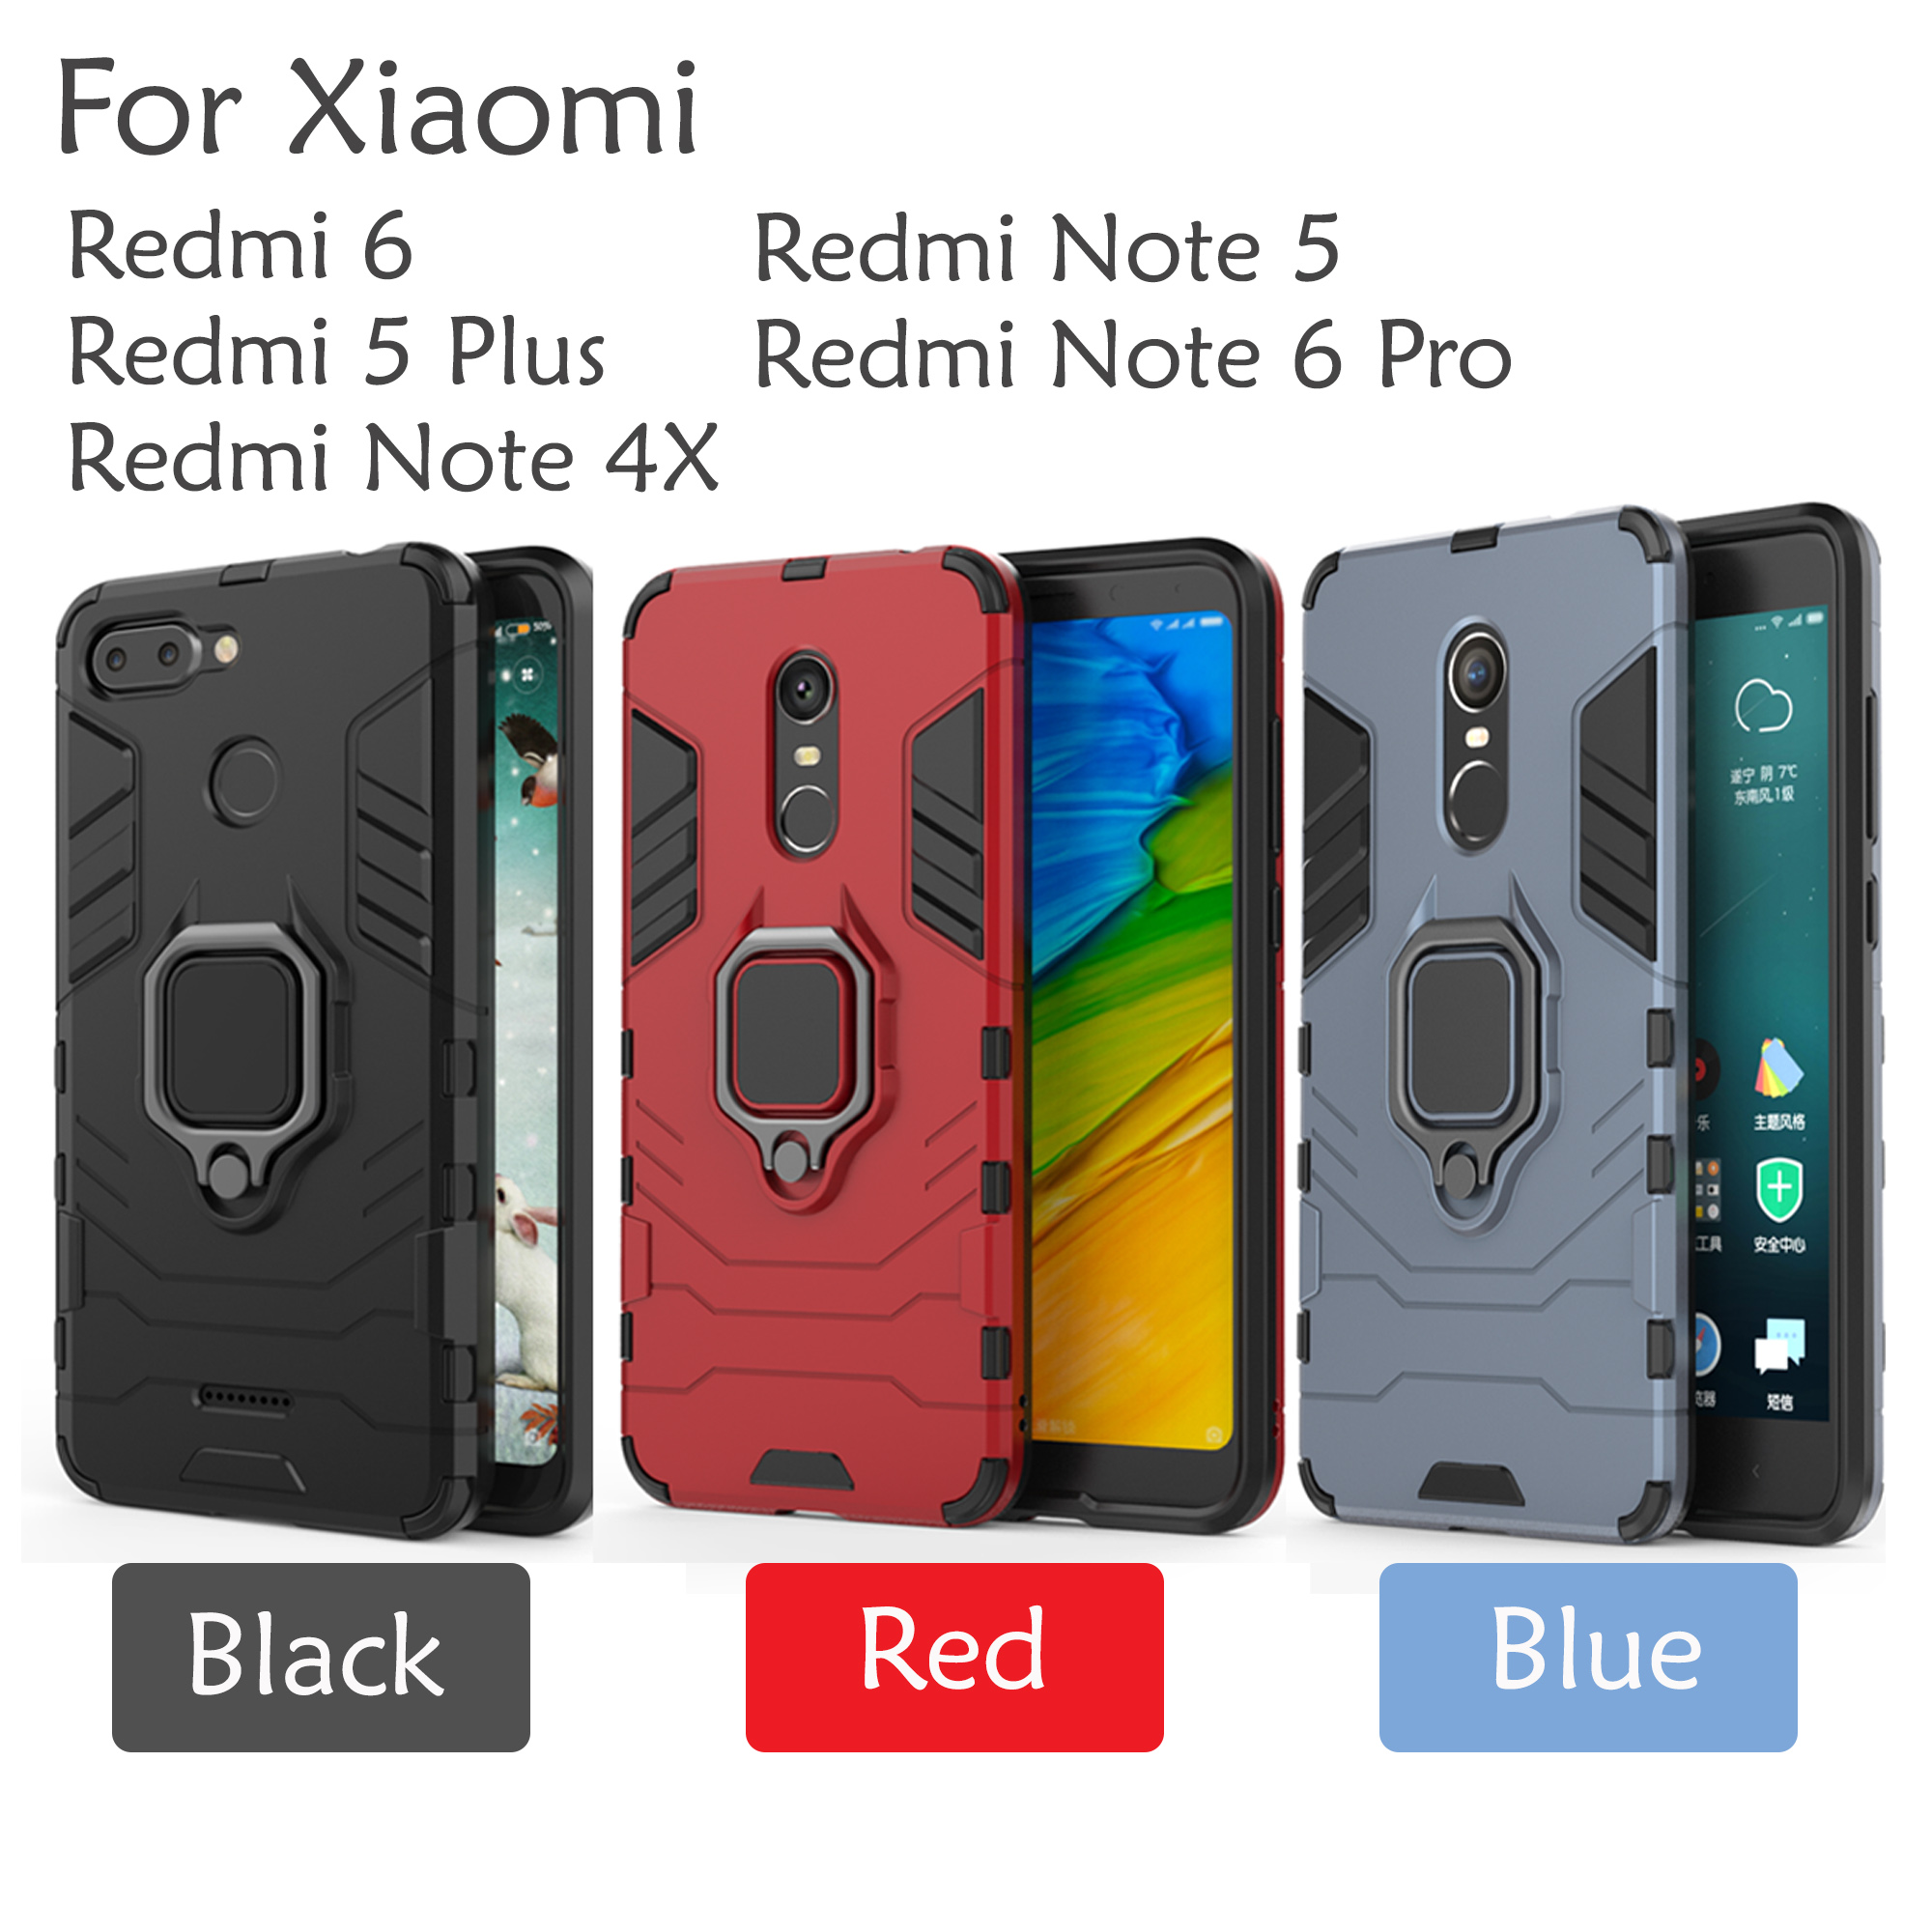 Xiaomi redmi 5 plus o redmi note 5 pro